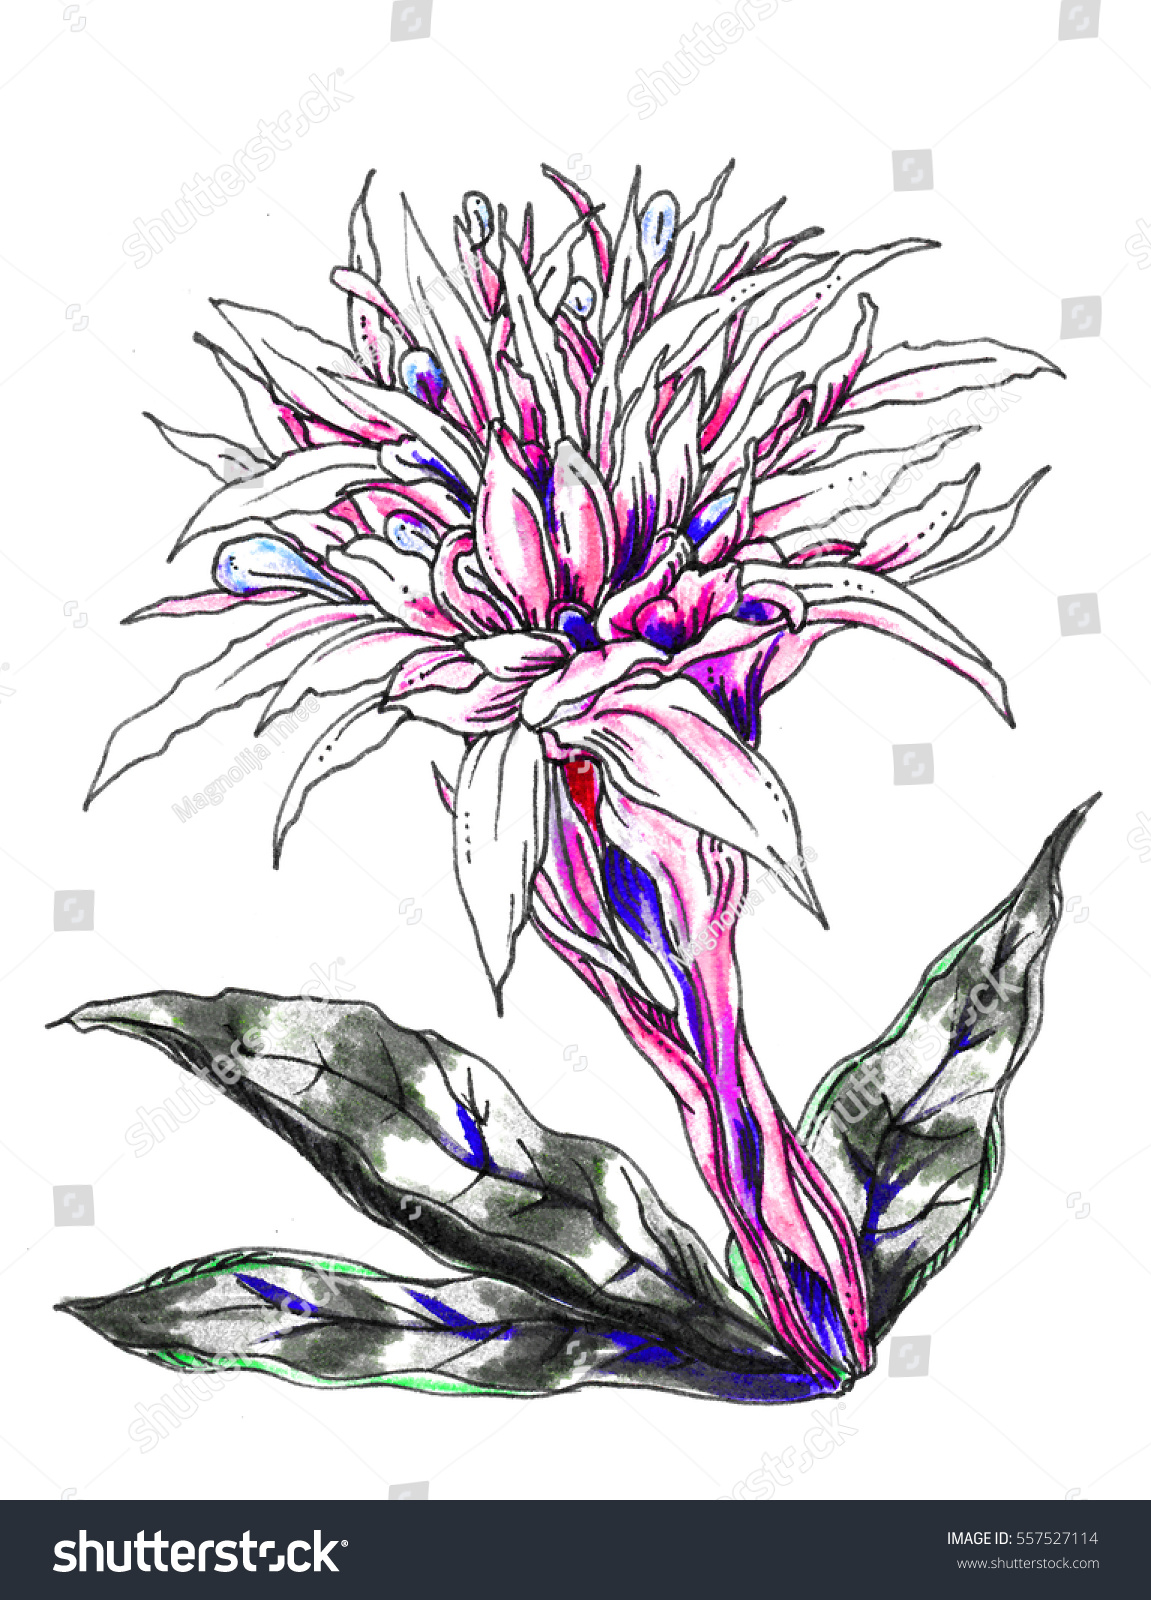 Aechmea Fasciata Bromeliad Flower Hand Drawn Stock Illustration 557527114